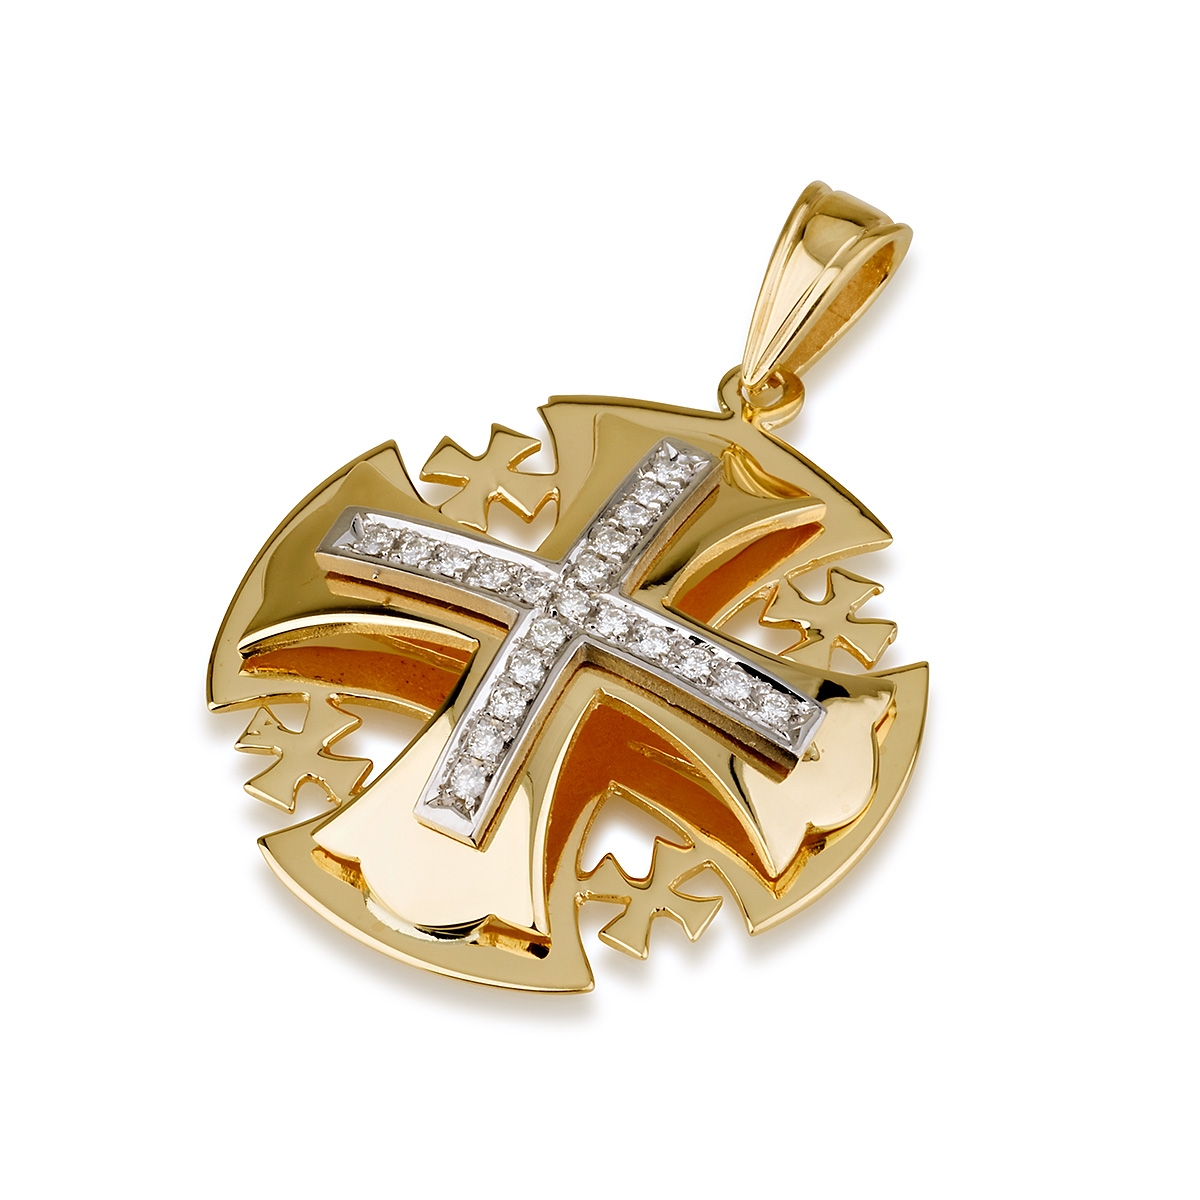 Ben Jewelry 18K Gold Medium Rounded Jerusalem Cross Pendant with Diamonds in White Gold Setting - 1